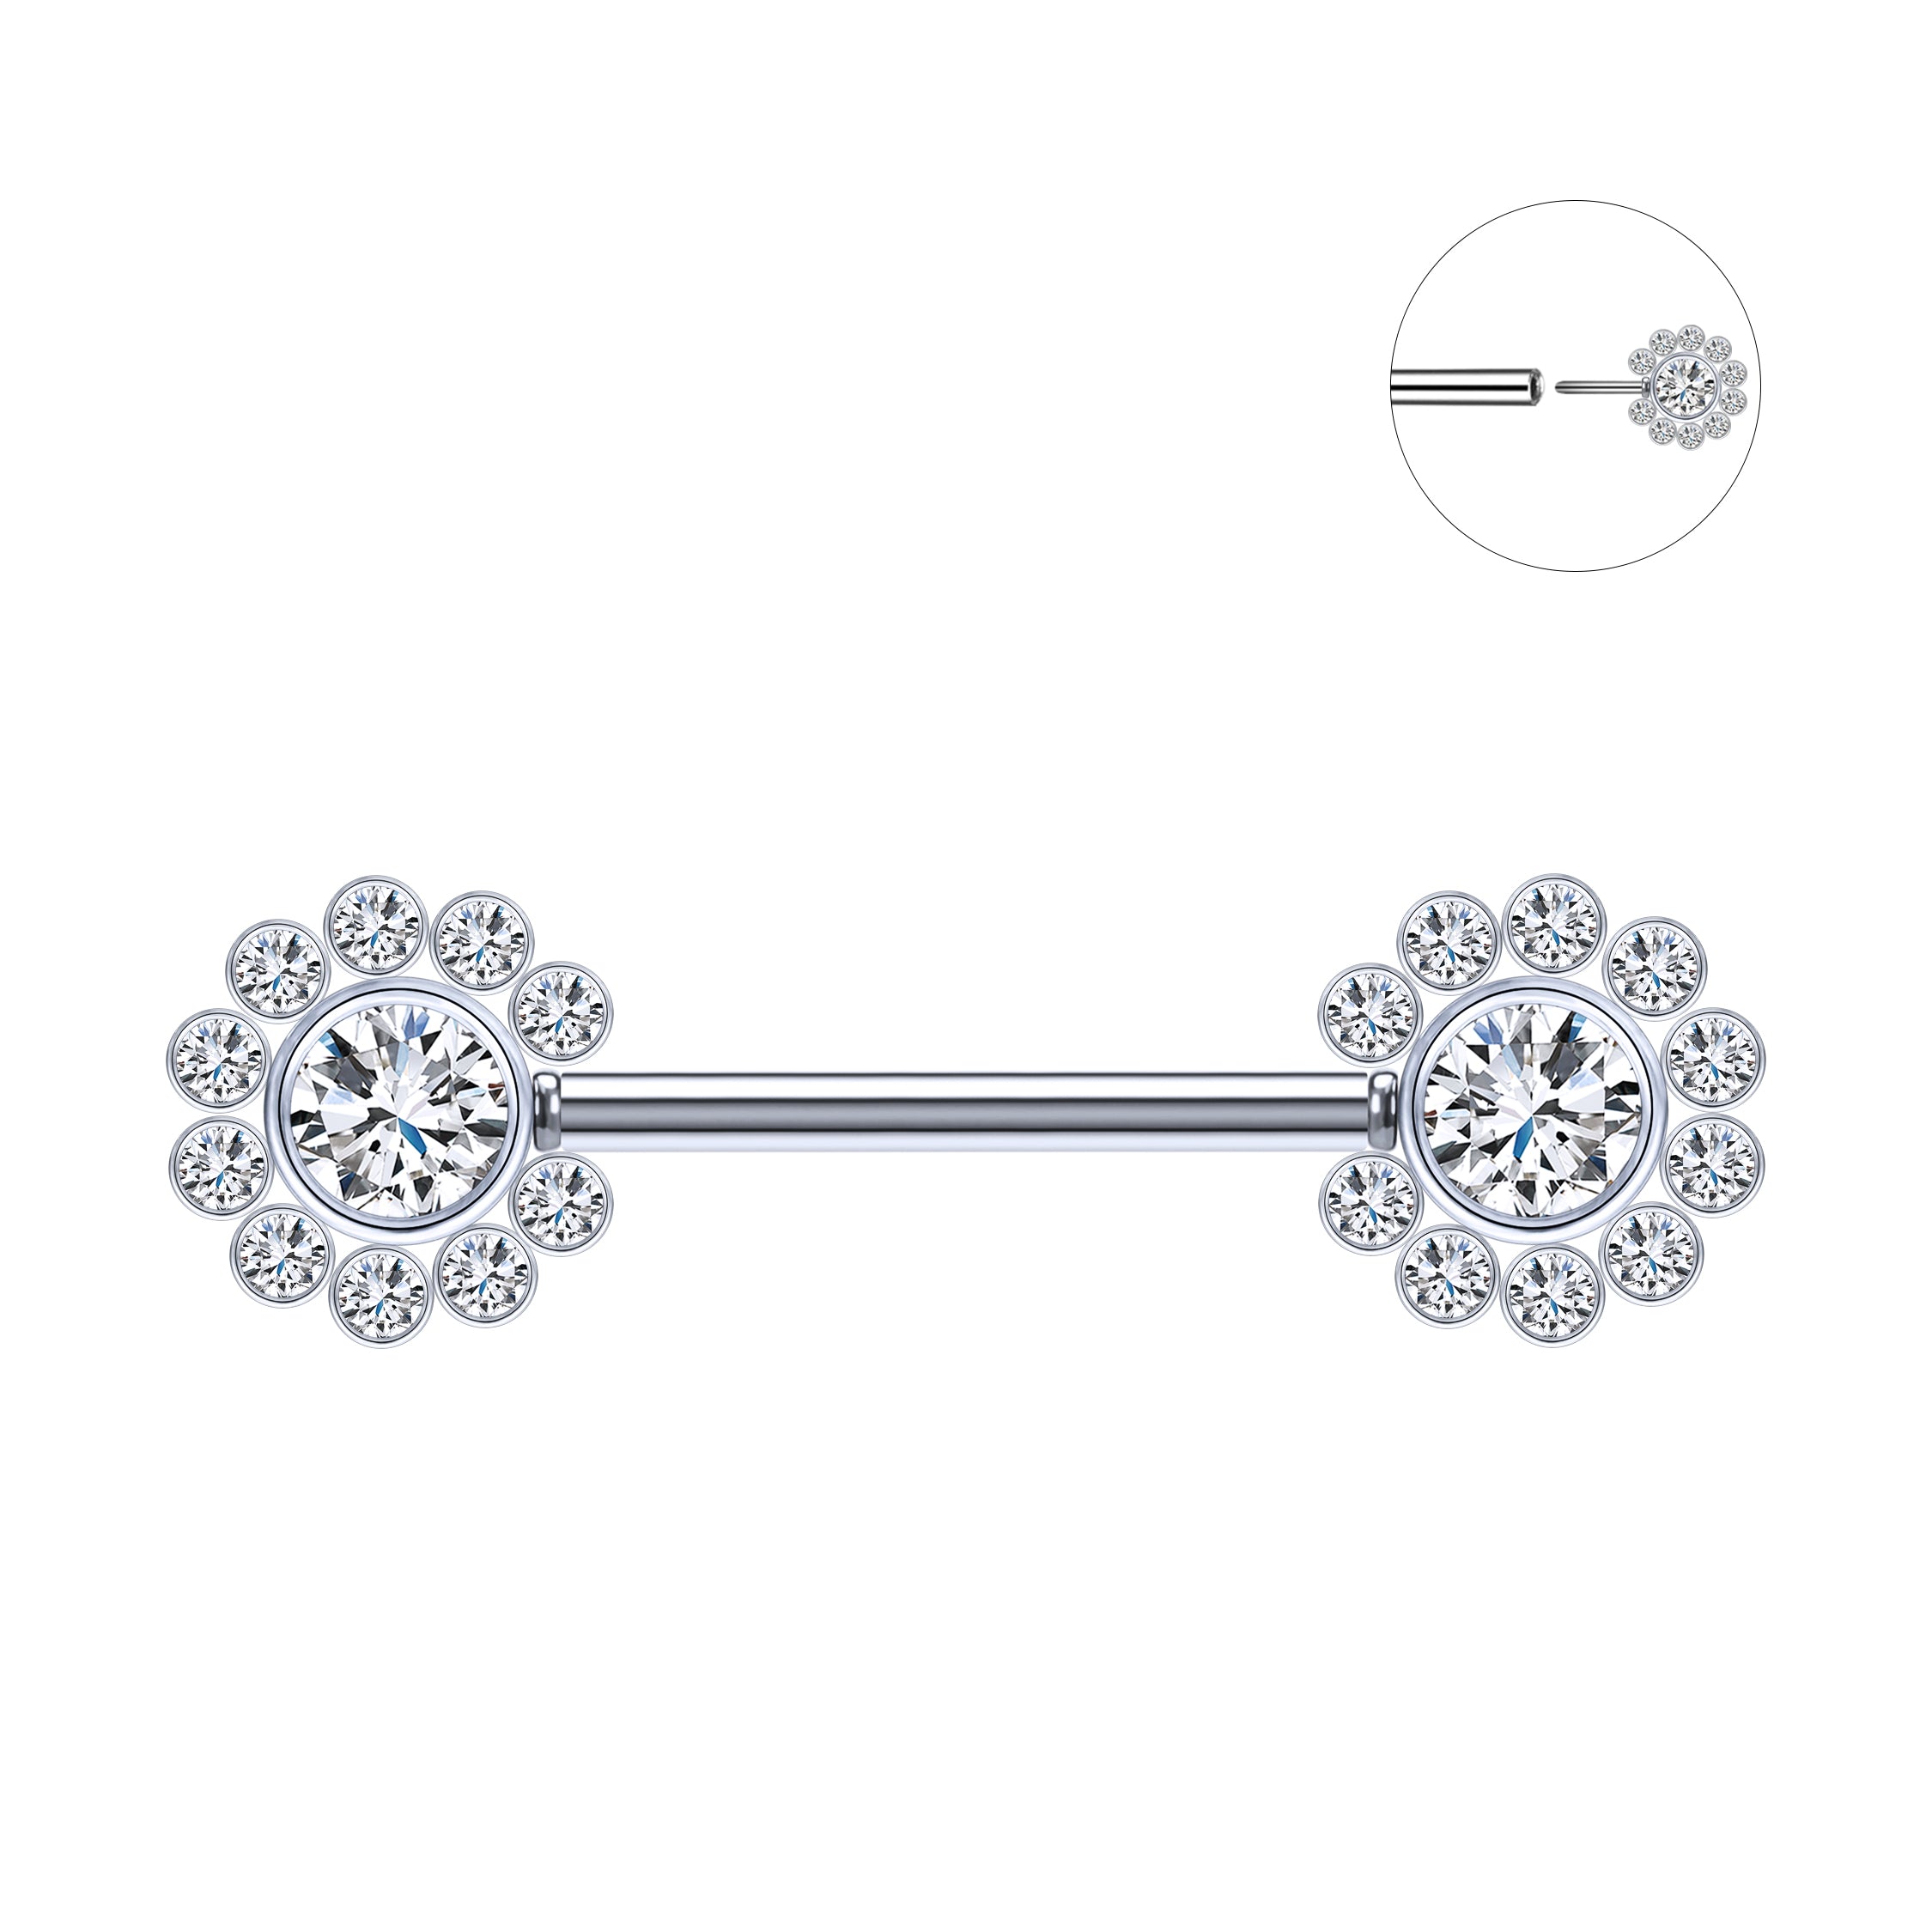 2pcs 14G Plug-in Nipple Ring Round Crystal Nipple Piercing Jewelry